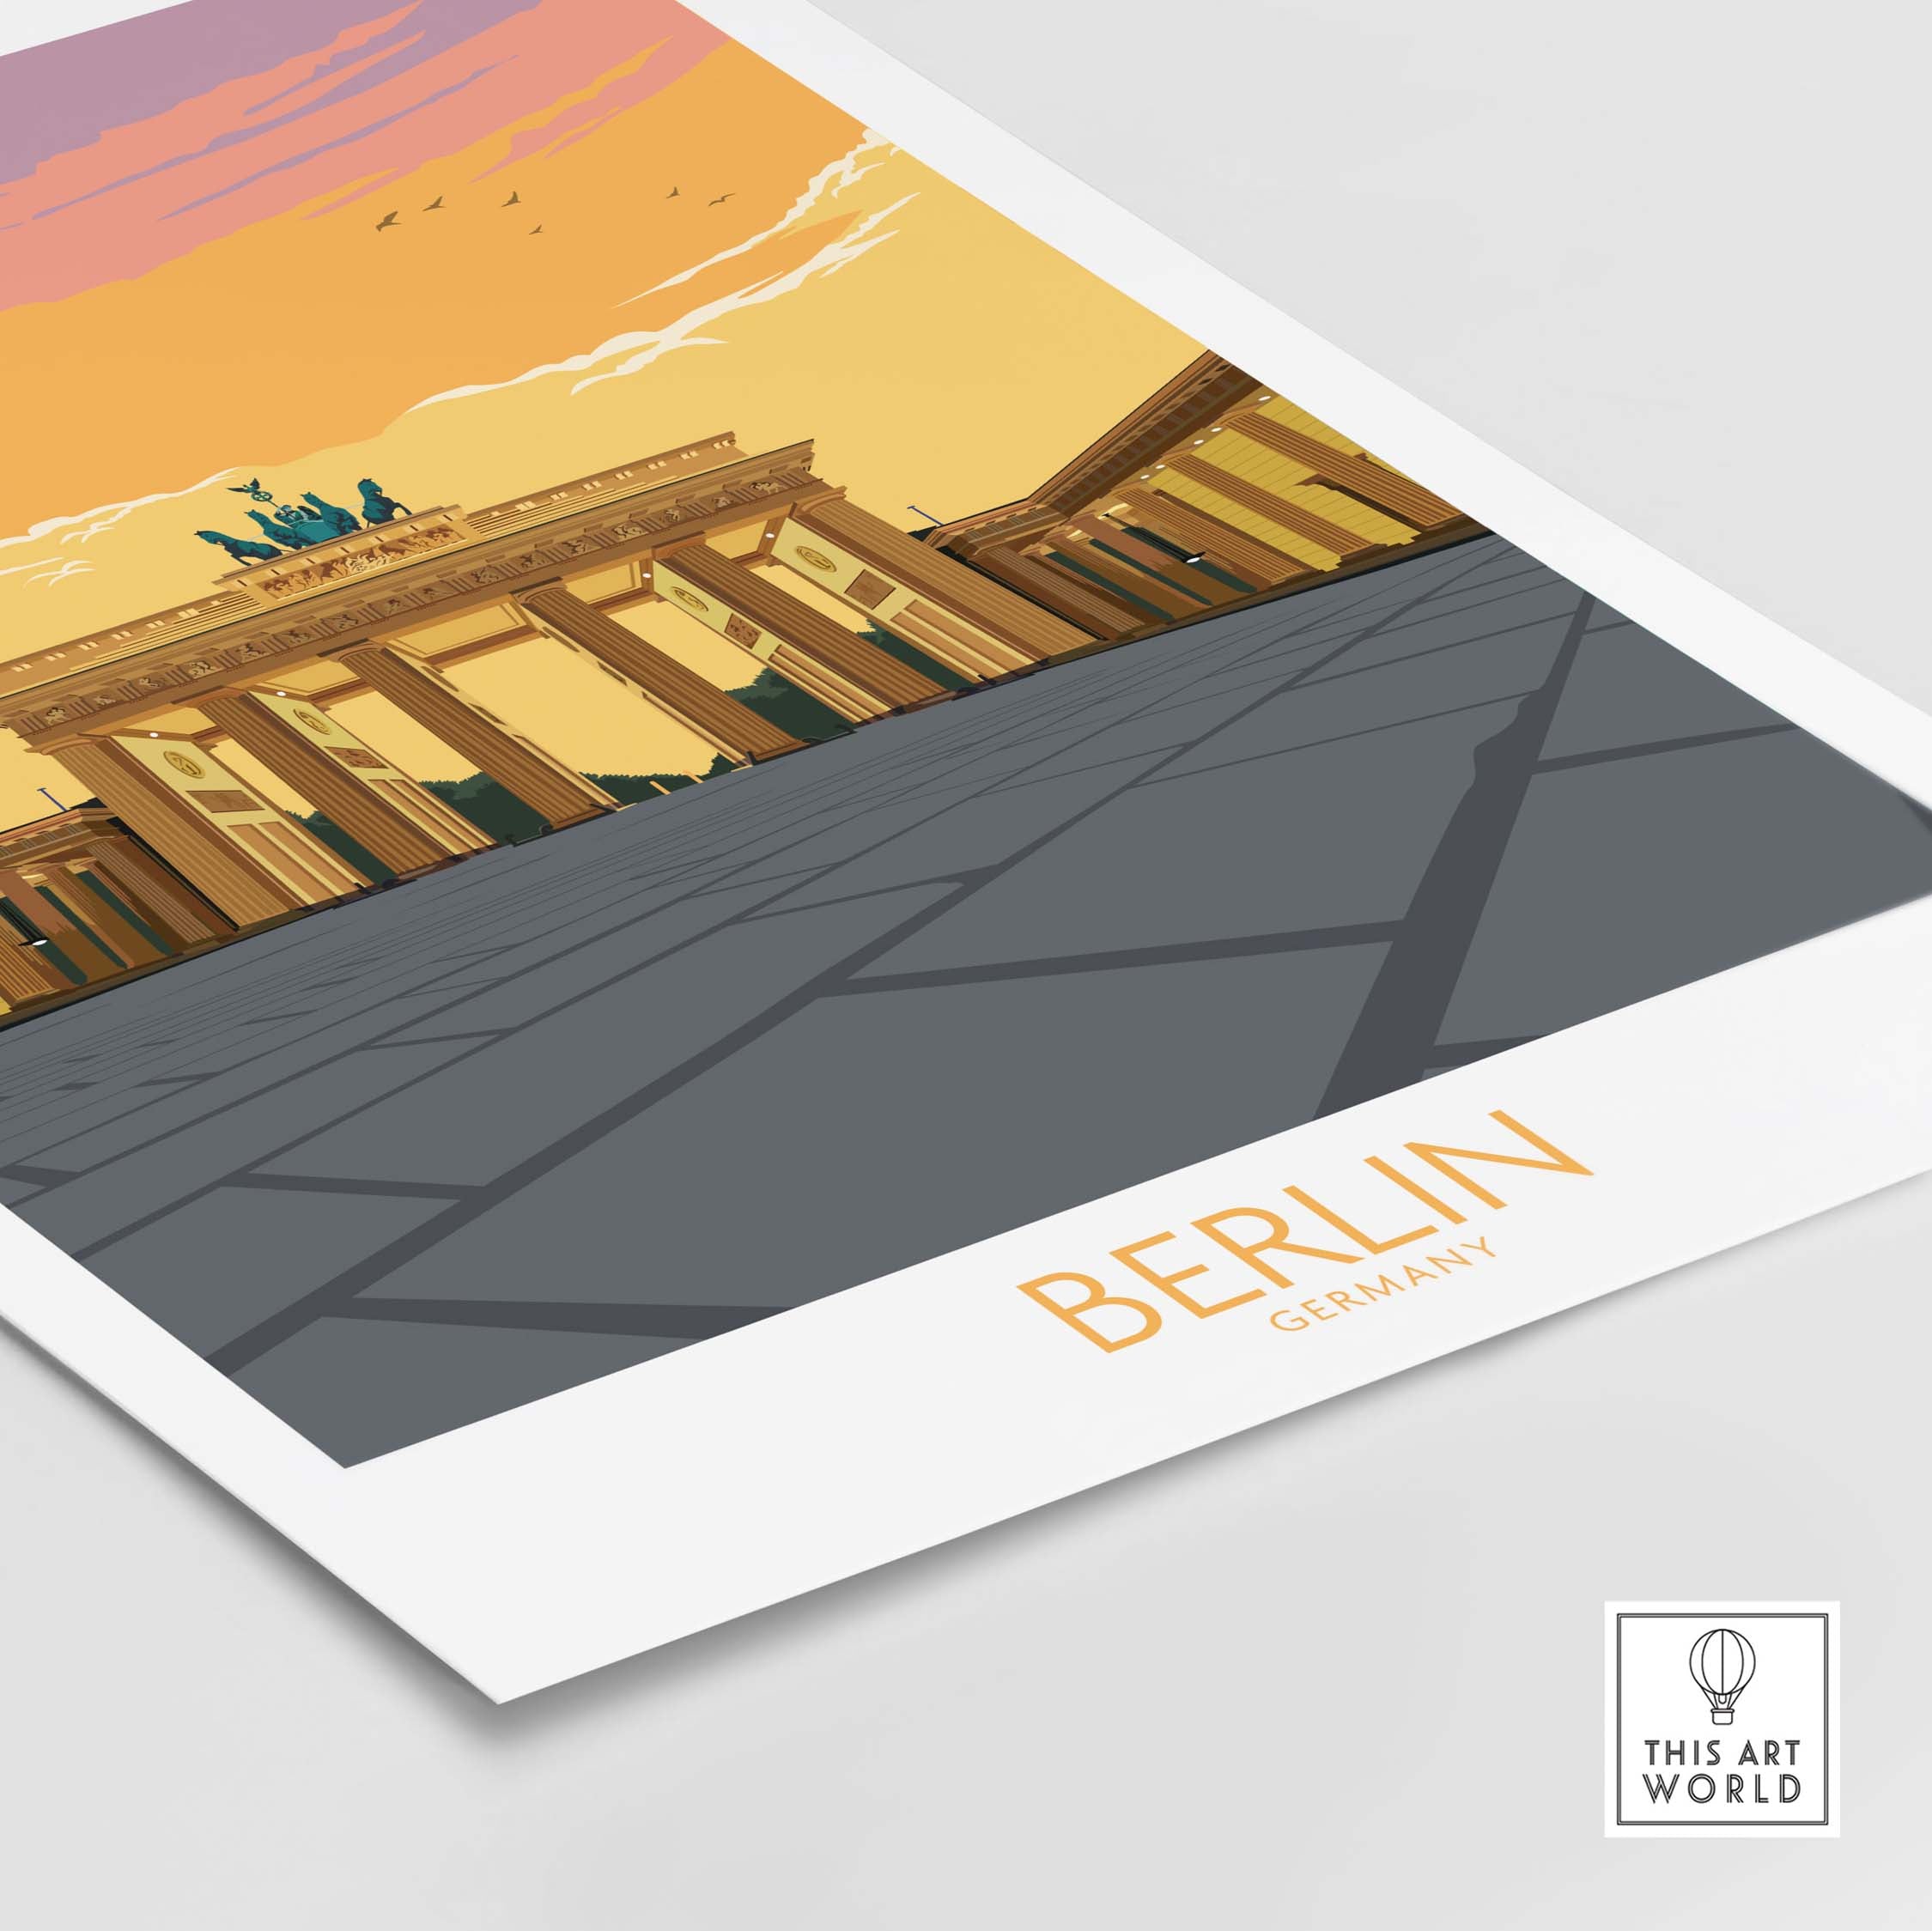 berlin print germany travel poster